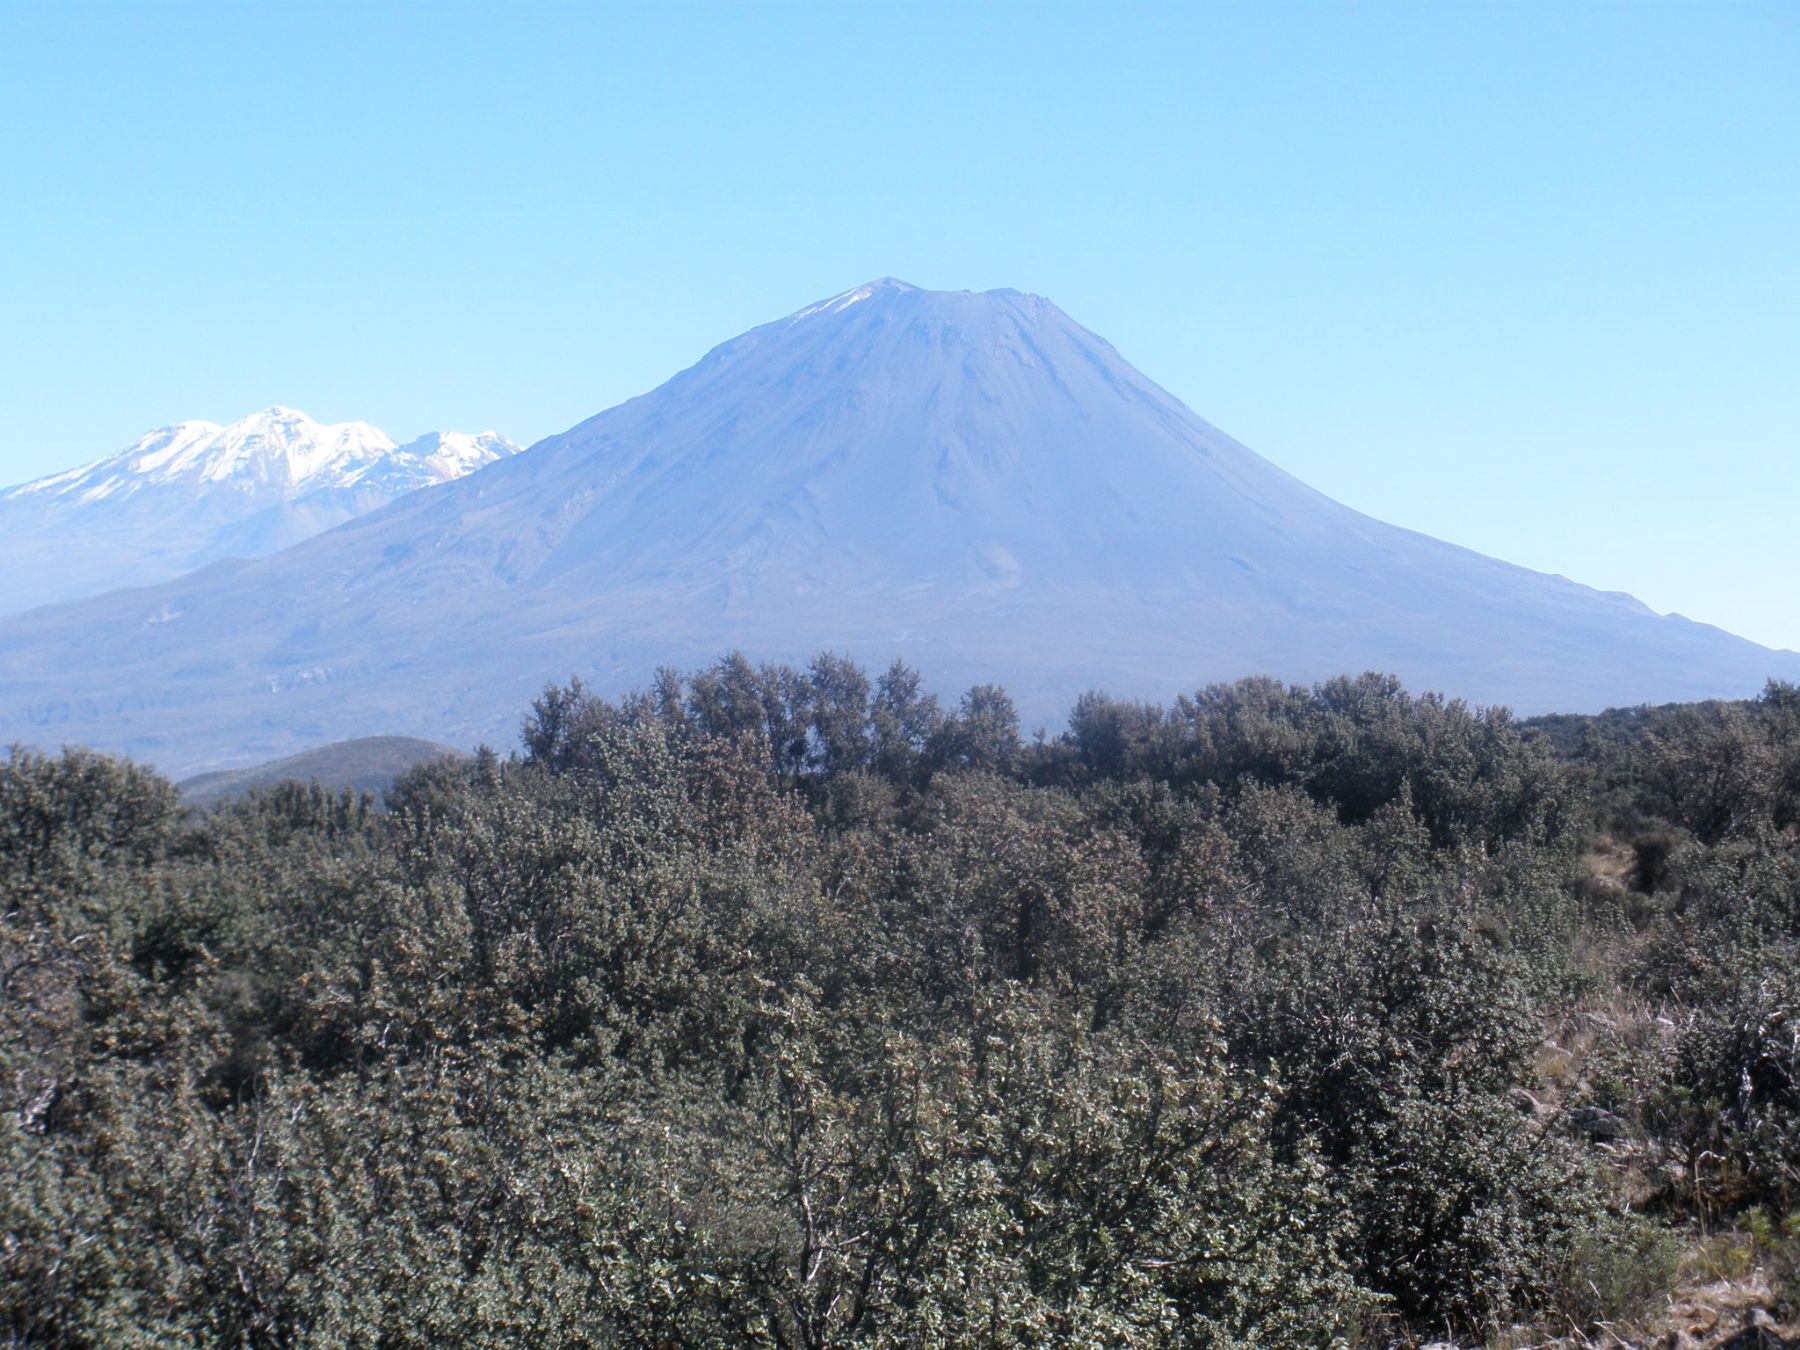 Bosque de queñuales de Arequipa está en la cabecera del volcán Pichu Pichu, a 3,200 m.s.n.m. Foto: ANDINA / Rocío Méndez.